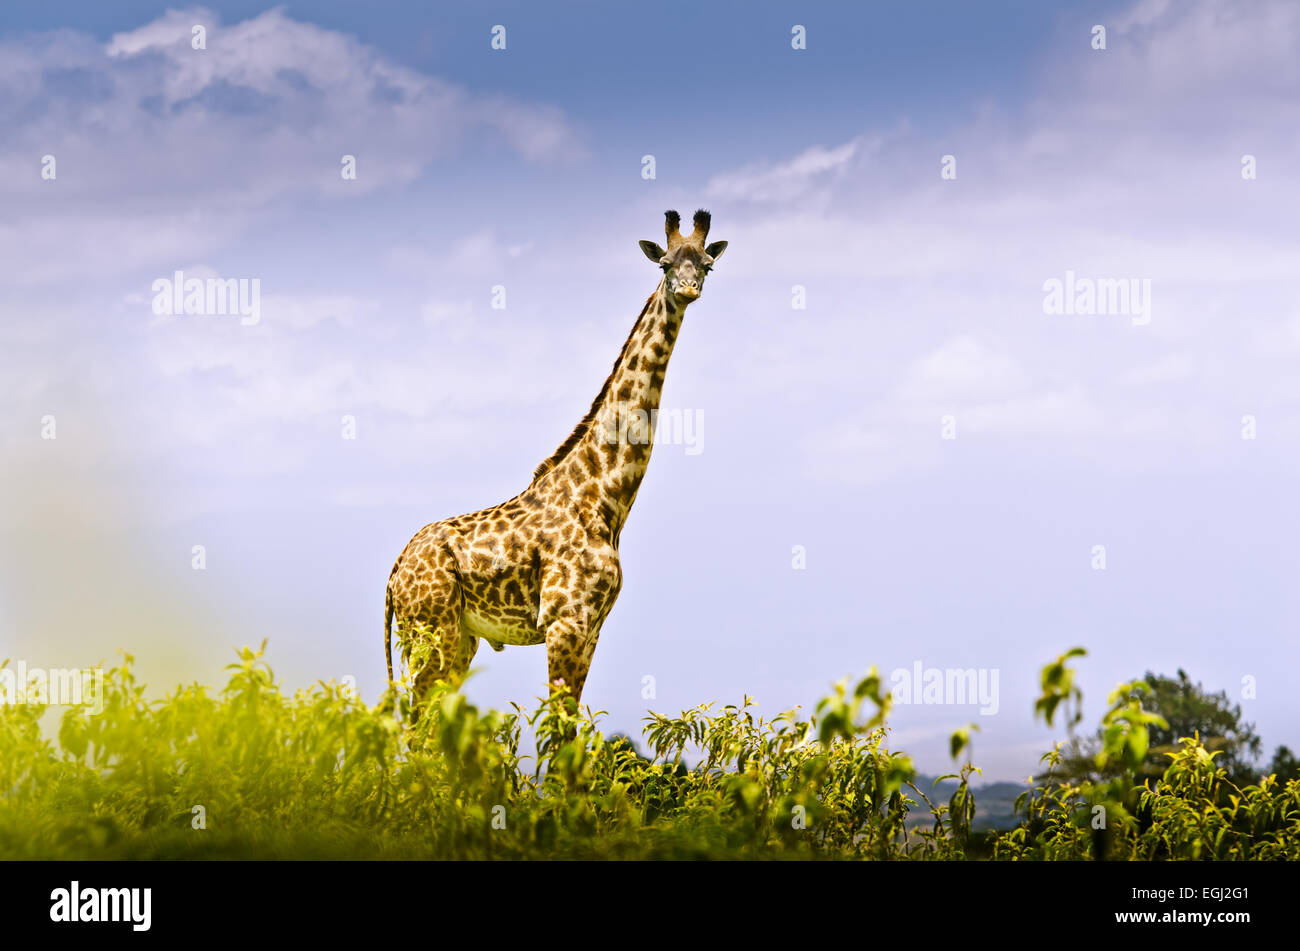 Africa, Tanzania, East Africa, Mt. Meru, Arusha national park, giraffe, Stock Photo